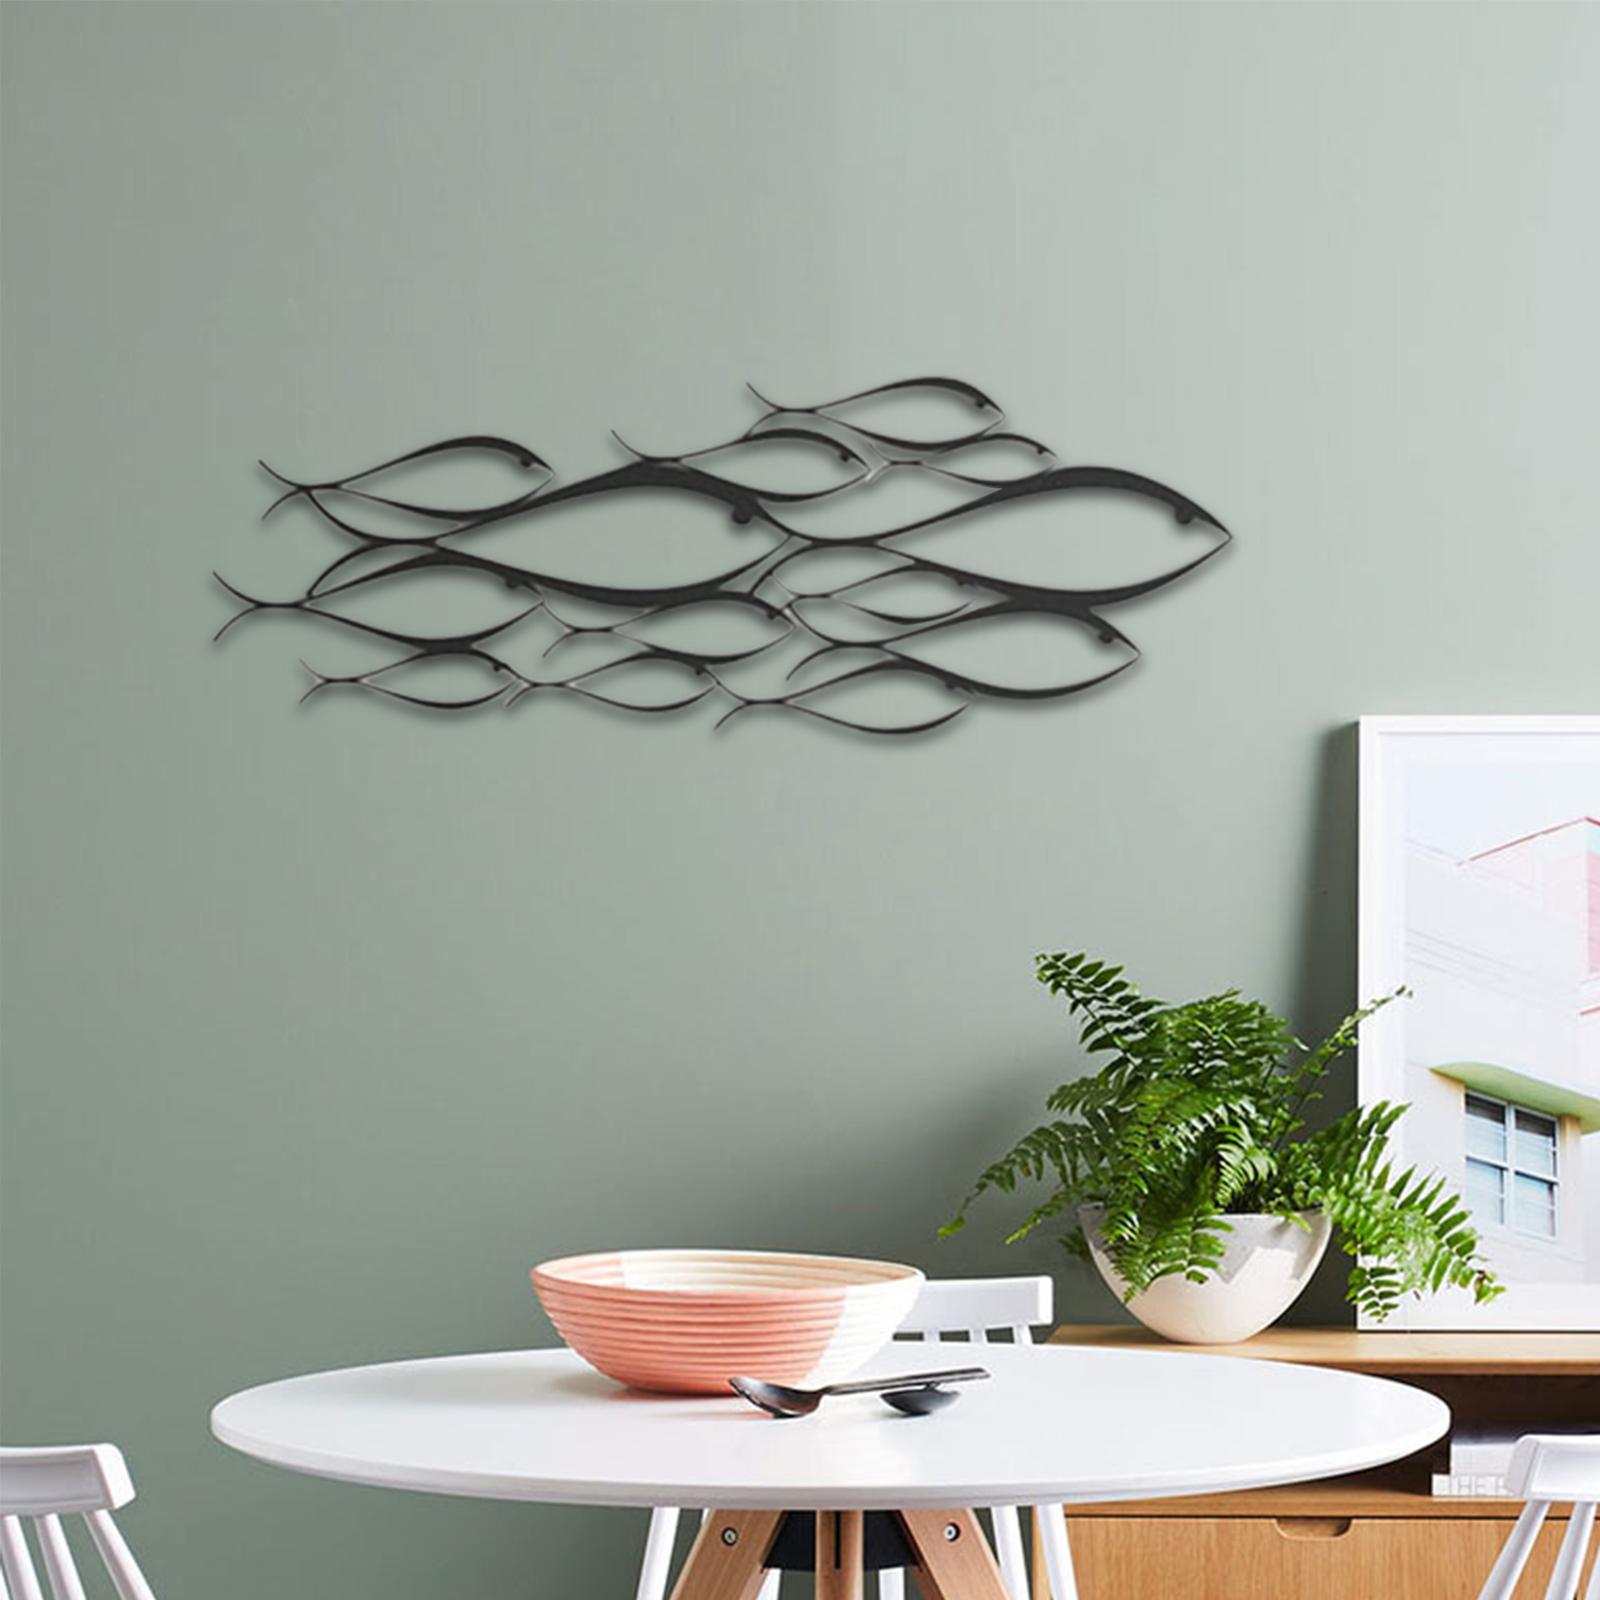 Creative Fish Wall Sculpture Decorative Metal for Home Living Room Indoor 66cmx24cm